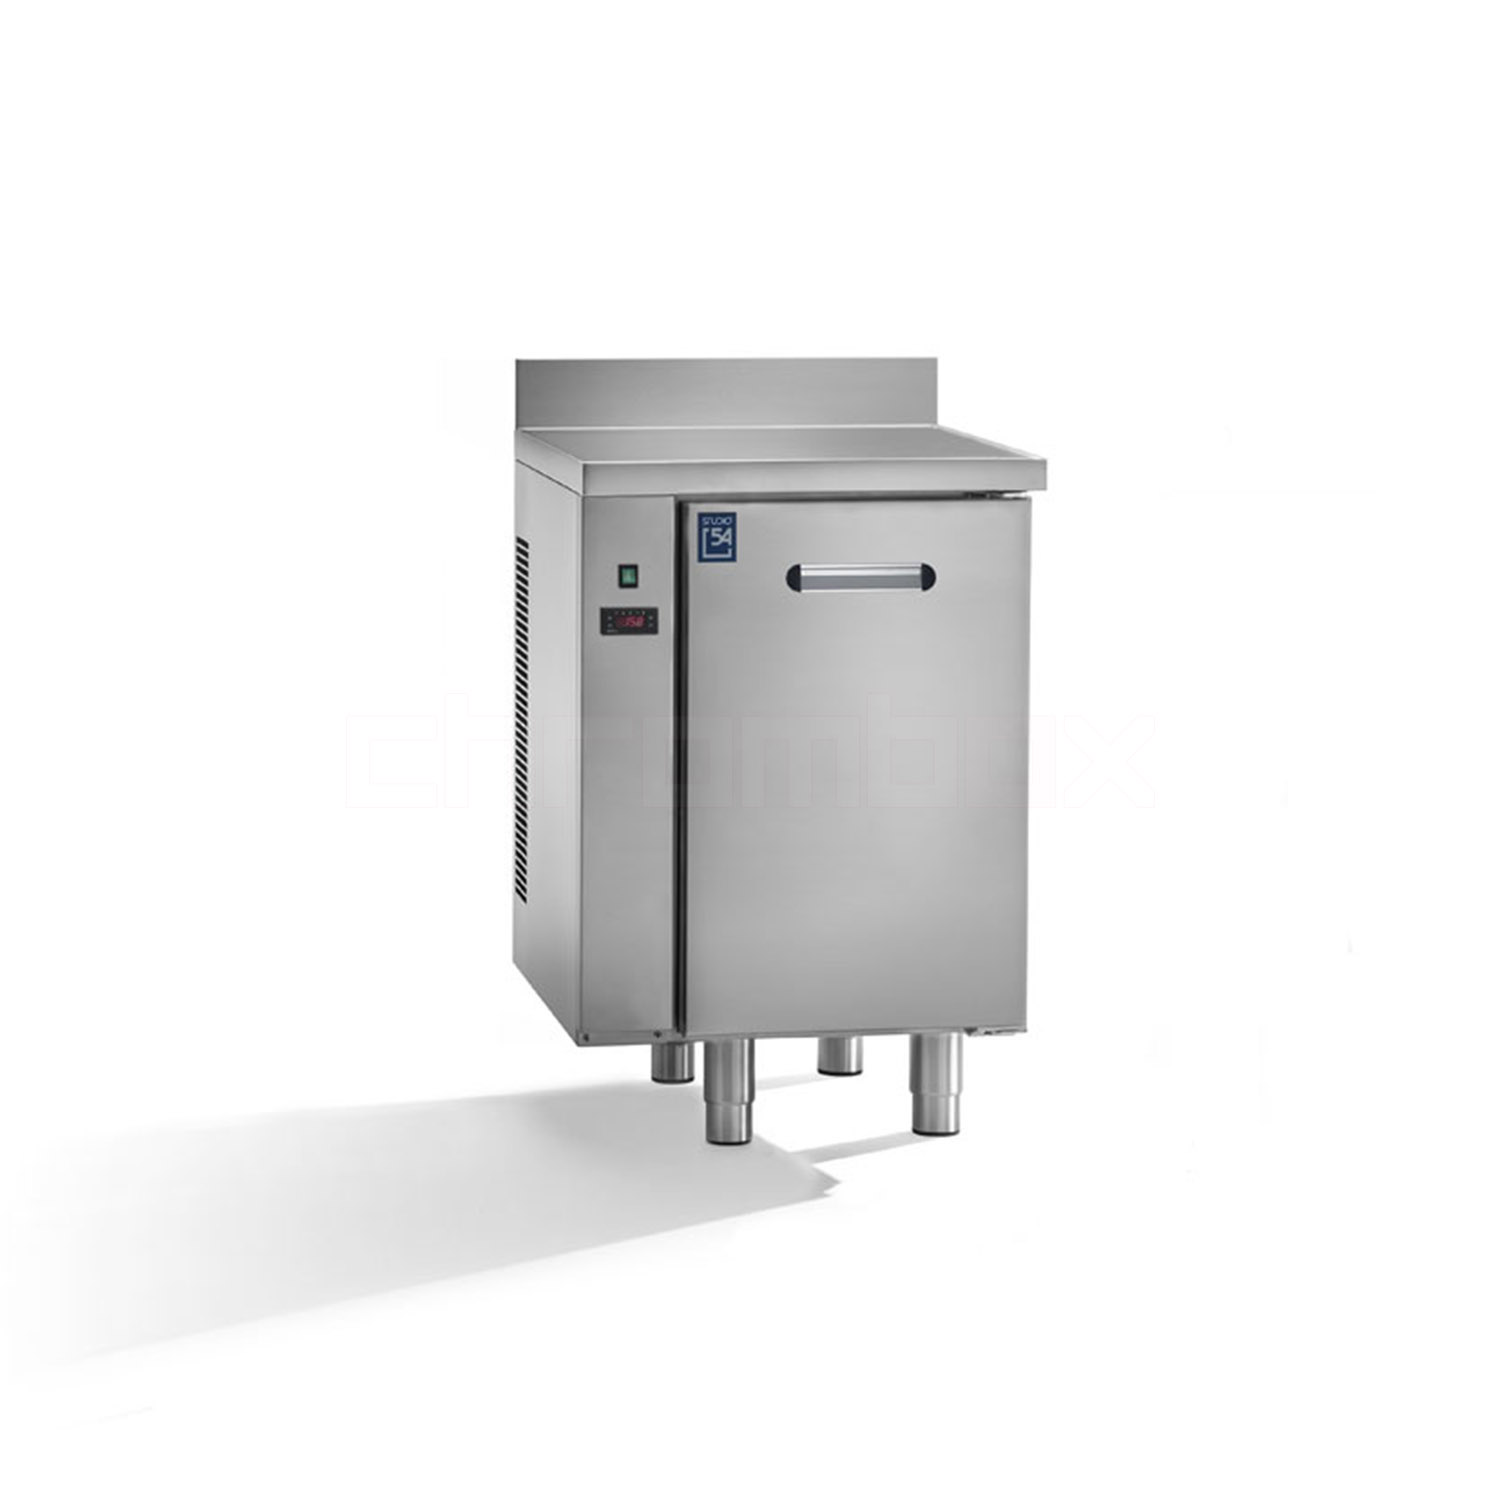 Kühltisch DAIQUIRI Basic Line GN 1/1, B 720  x T 700 x H 850+100 mm, 1 Kühlfach, Arbeitsplatte, zentralgekühlt